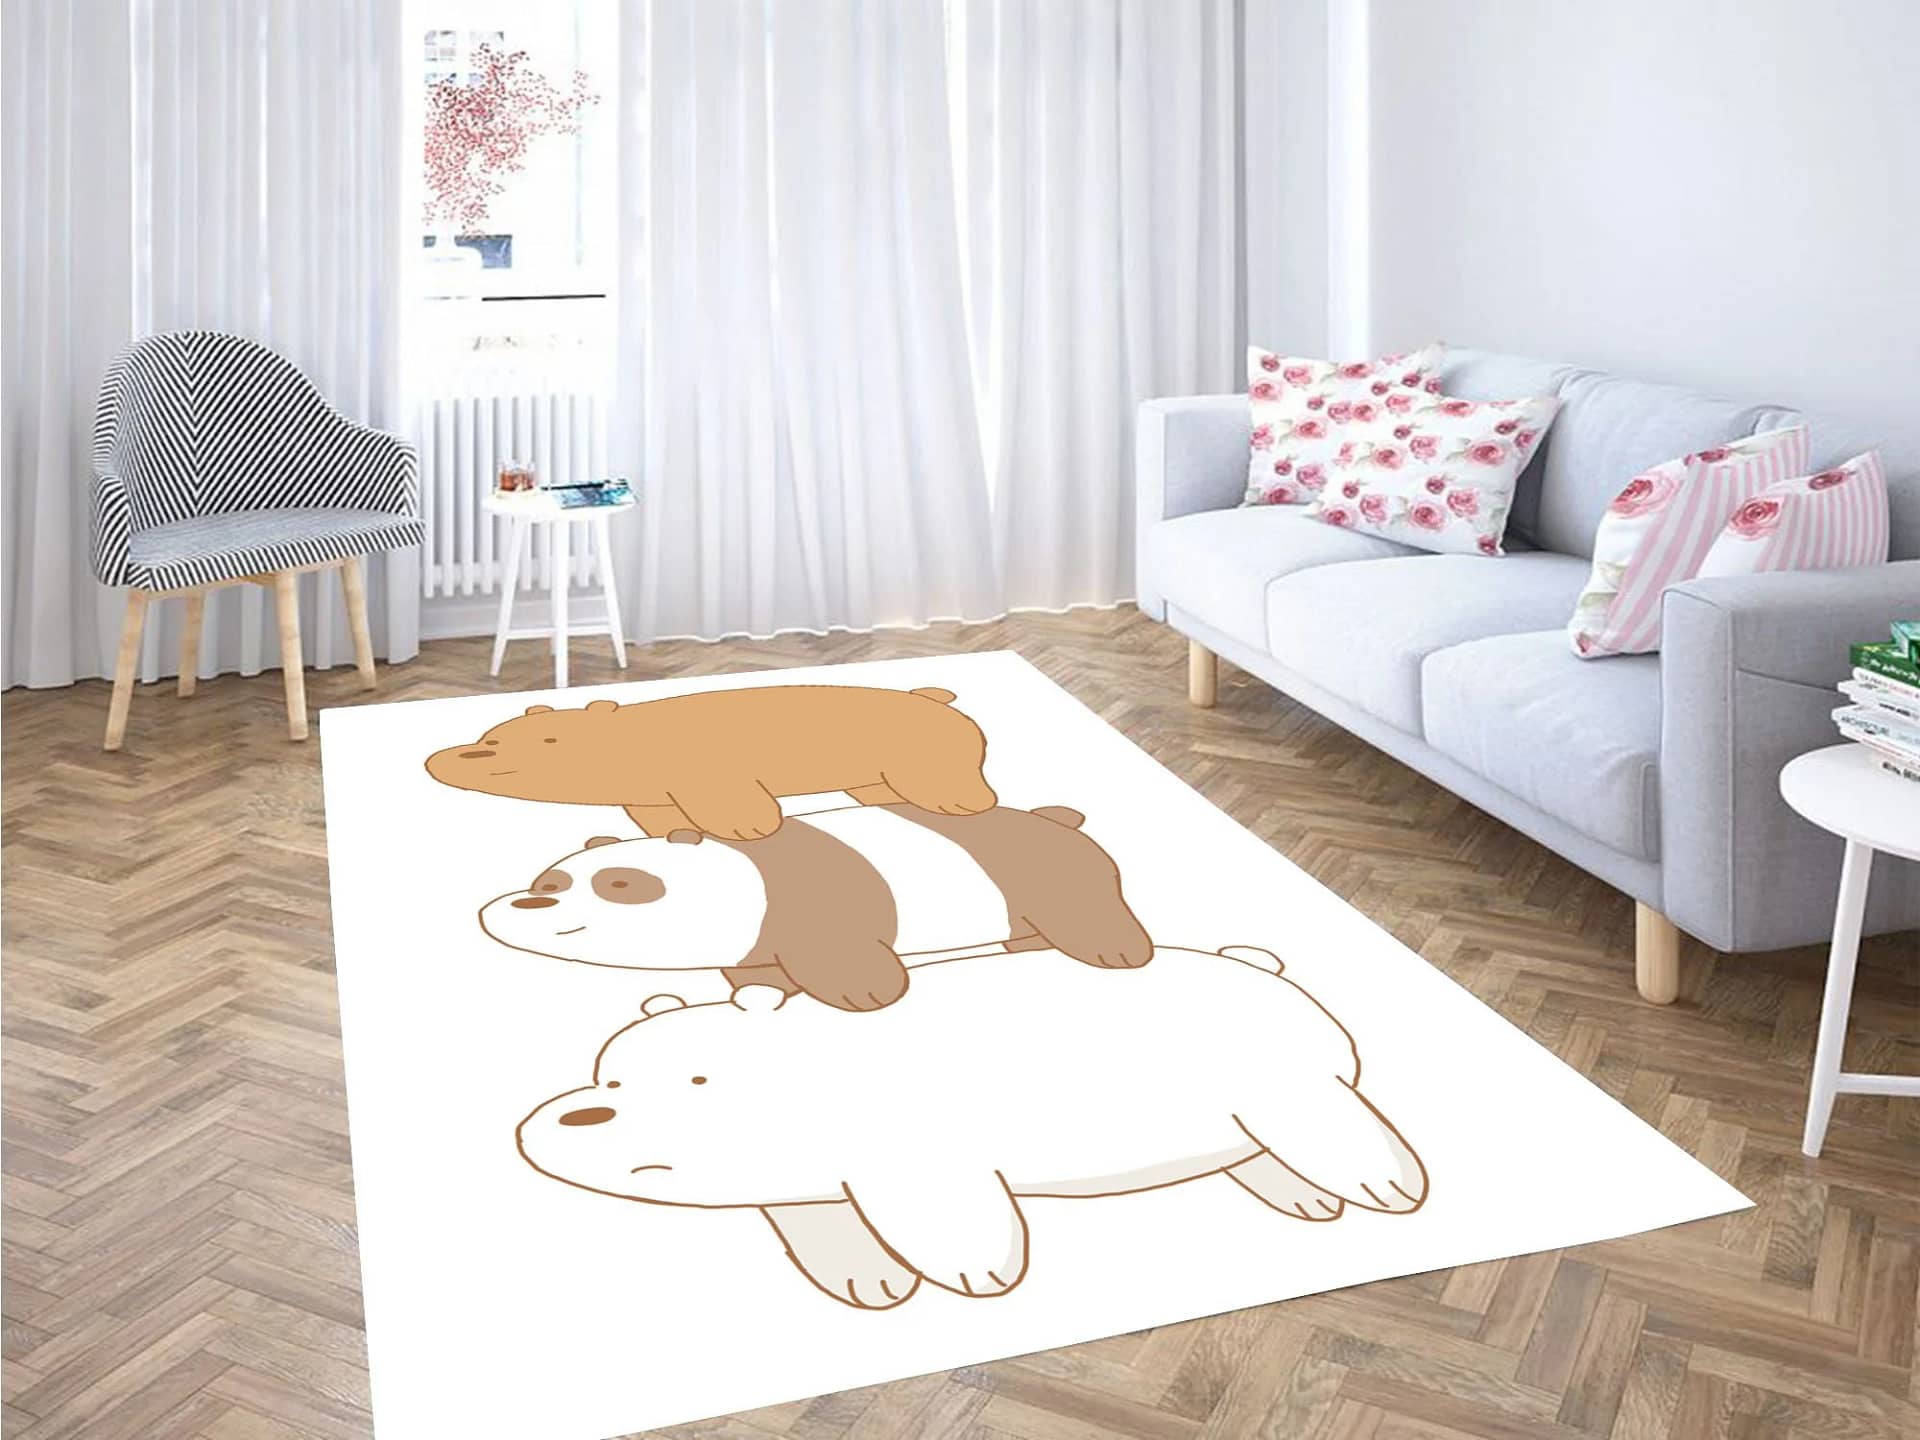 Pose We Bare Bears Carpet Rug